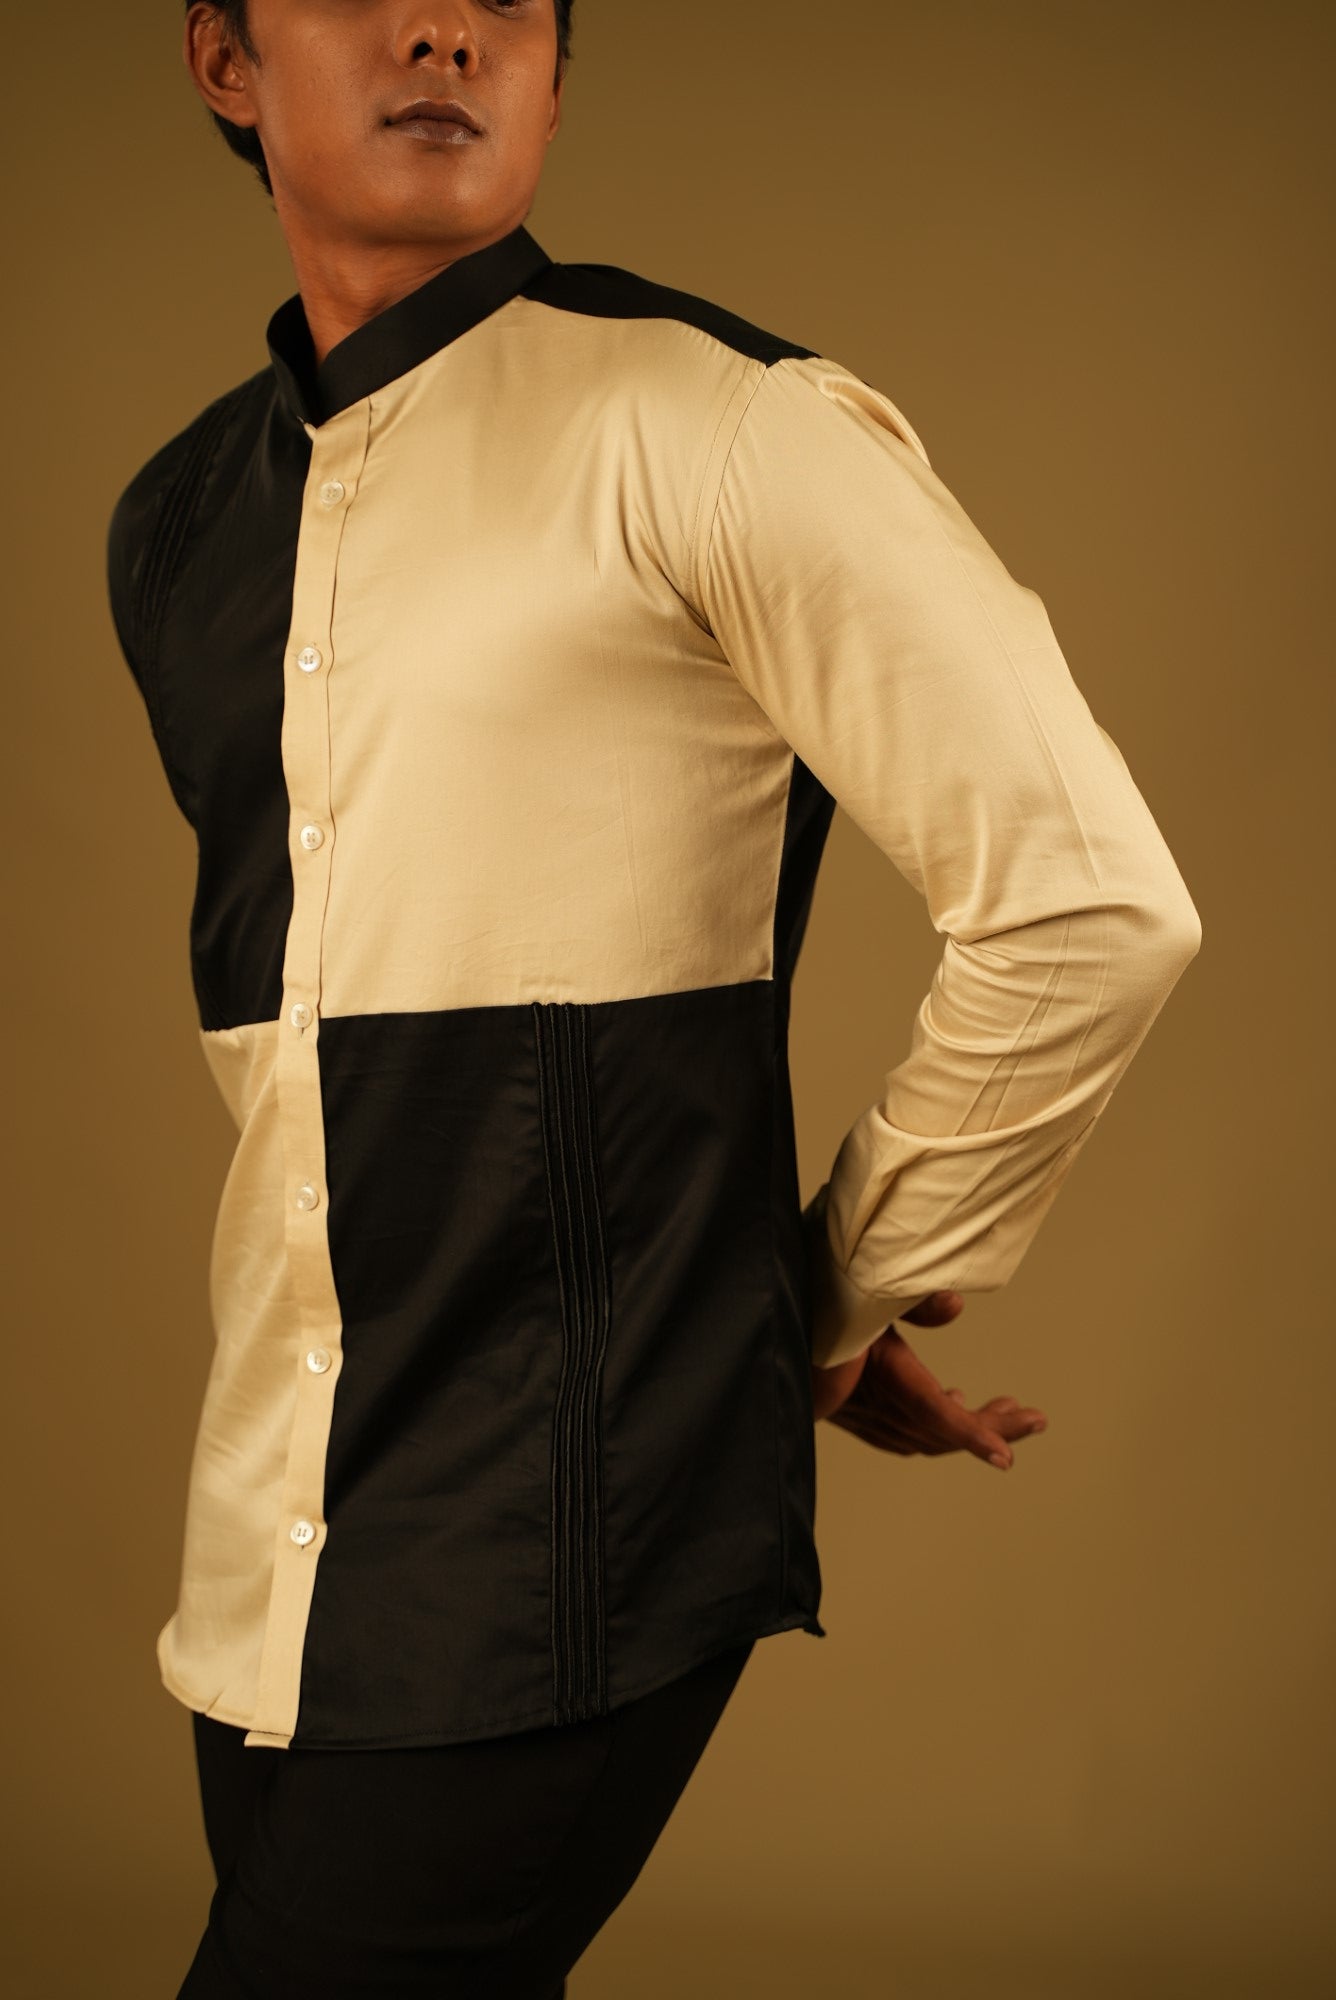 Men's Black & Beige Color Creak Checks Shirt Full Sleeves Casual Shirt - Hilo Design